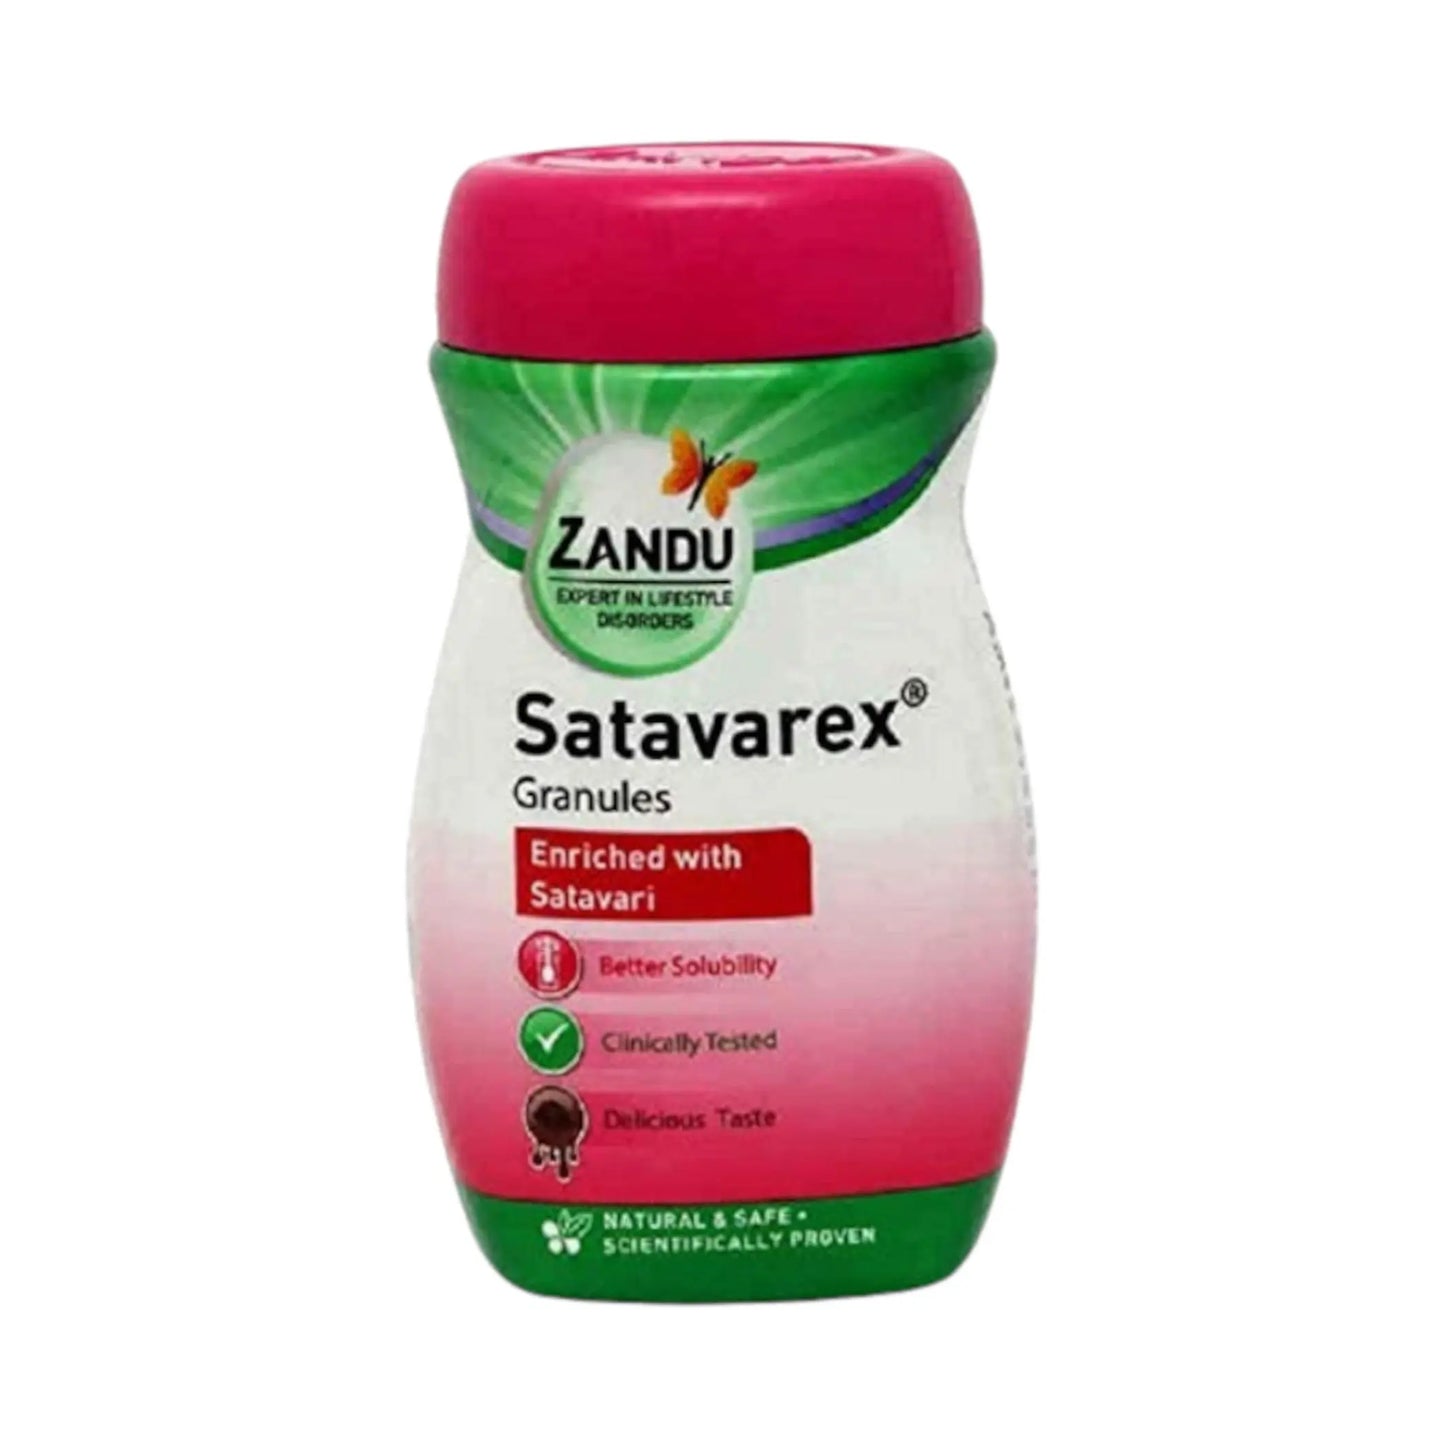 Zandu - Satavarex Granules 250 g - my-ayurvedic